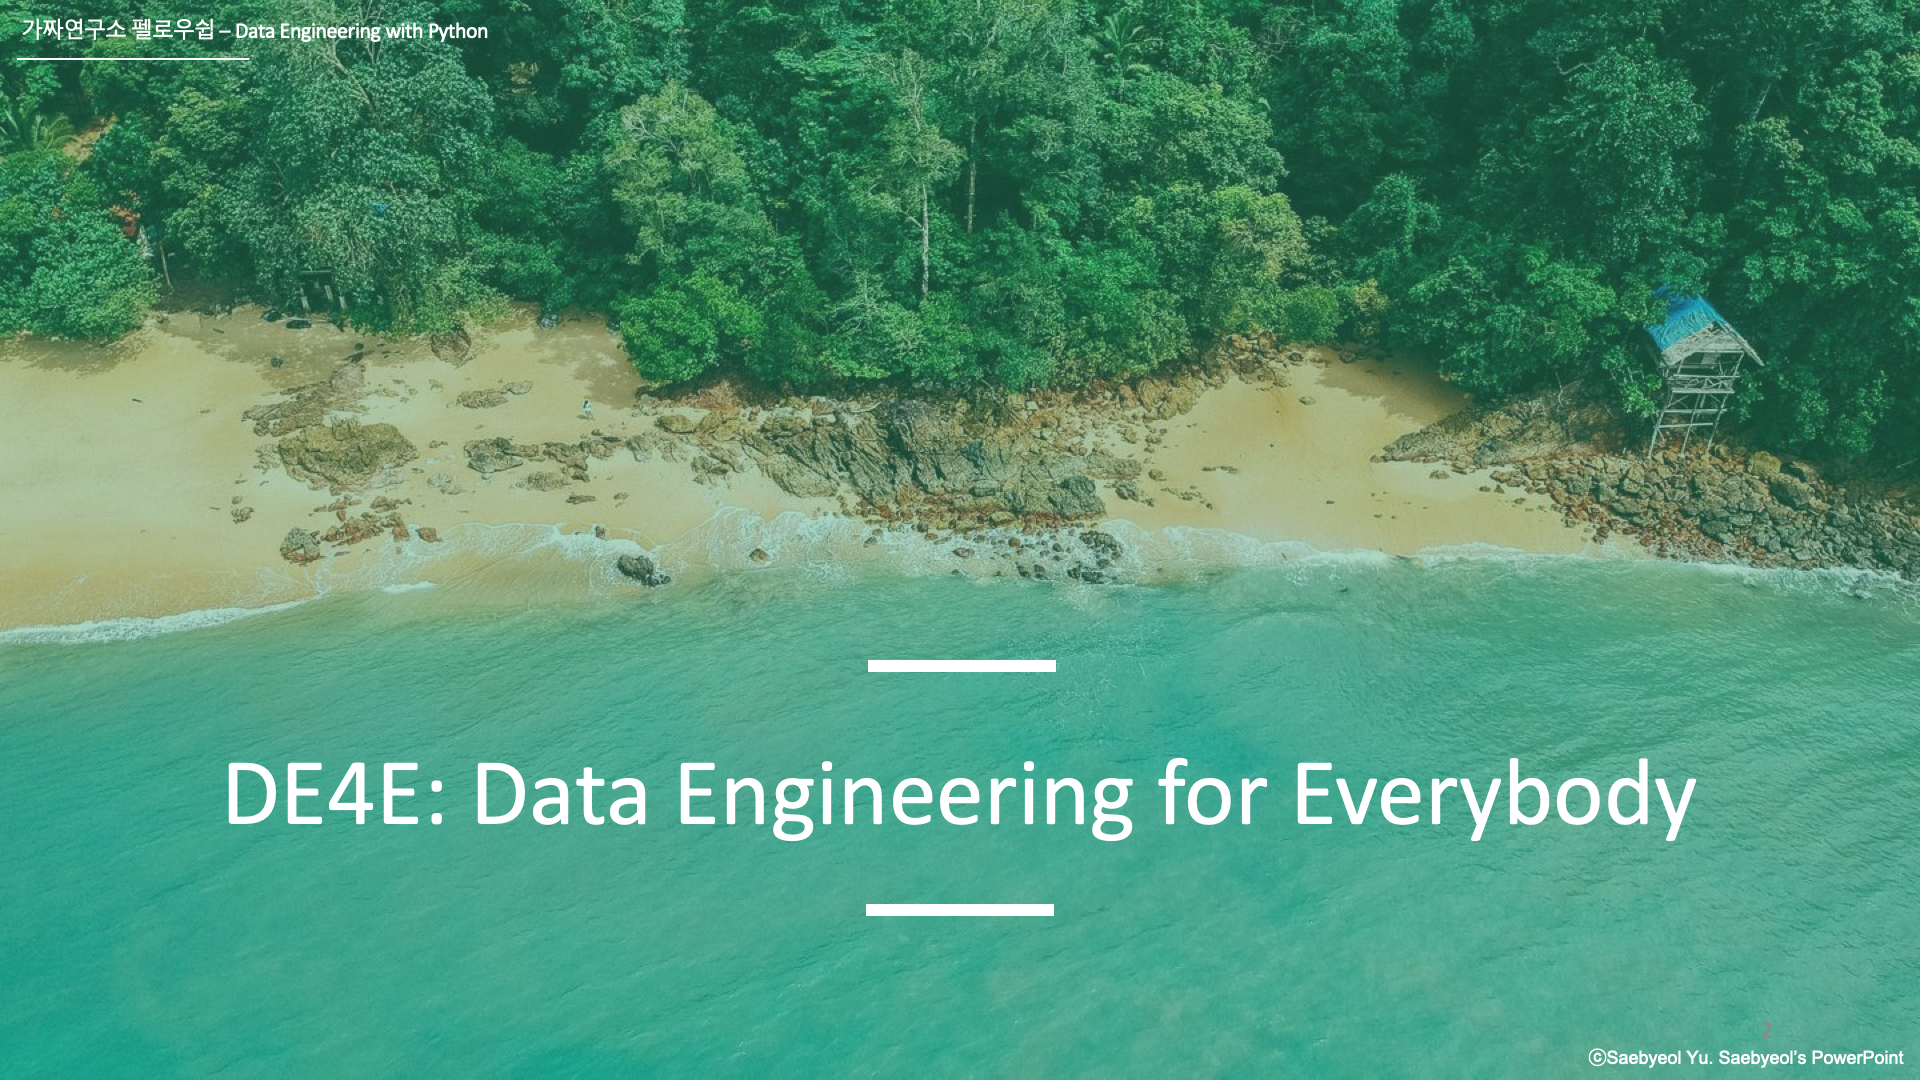 Data Engineering for Everybody